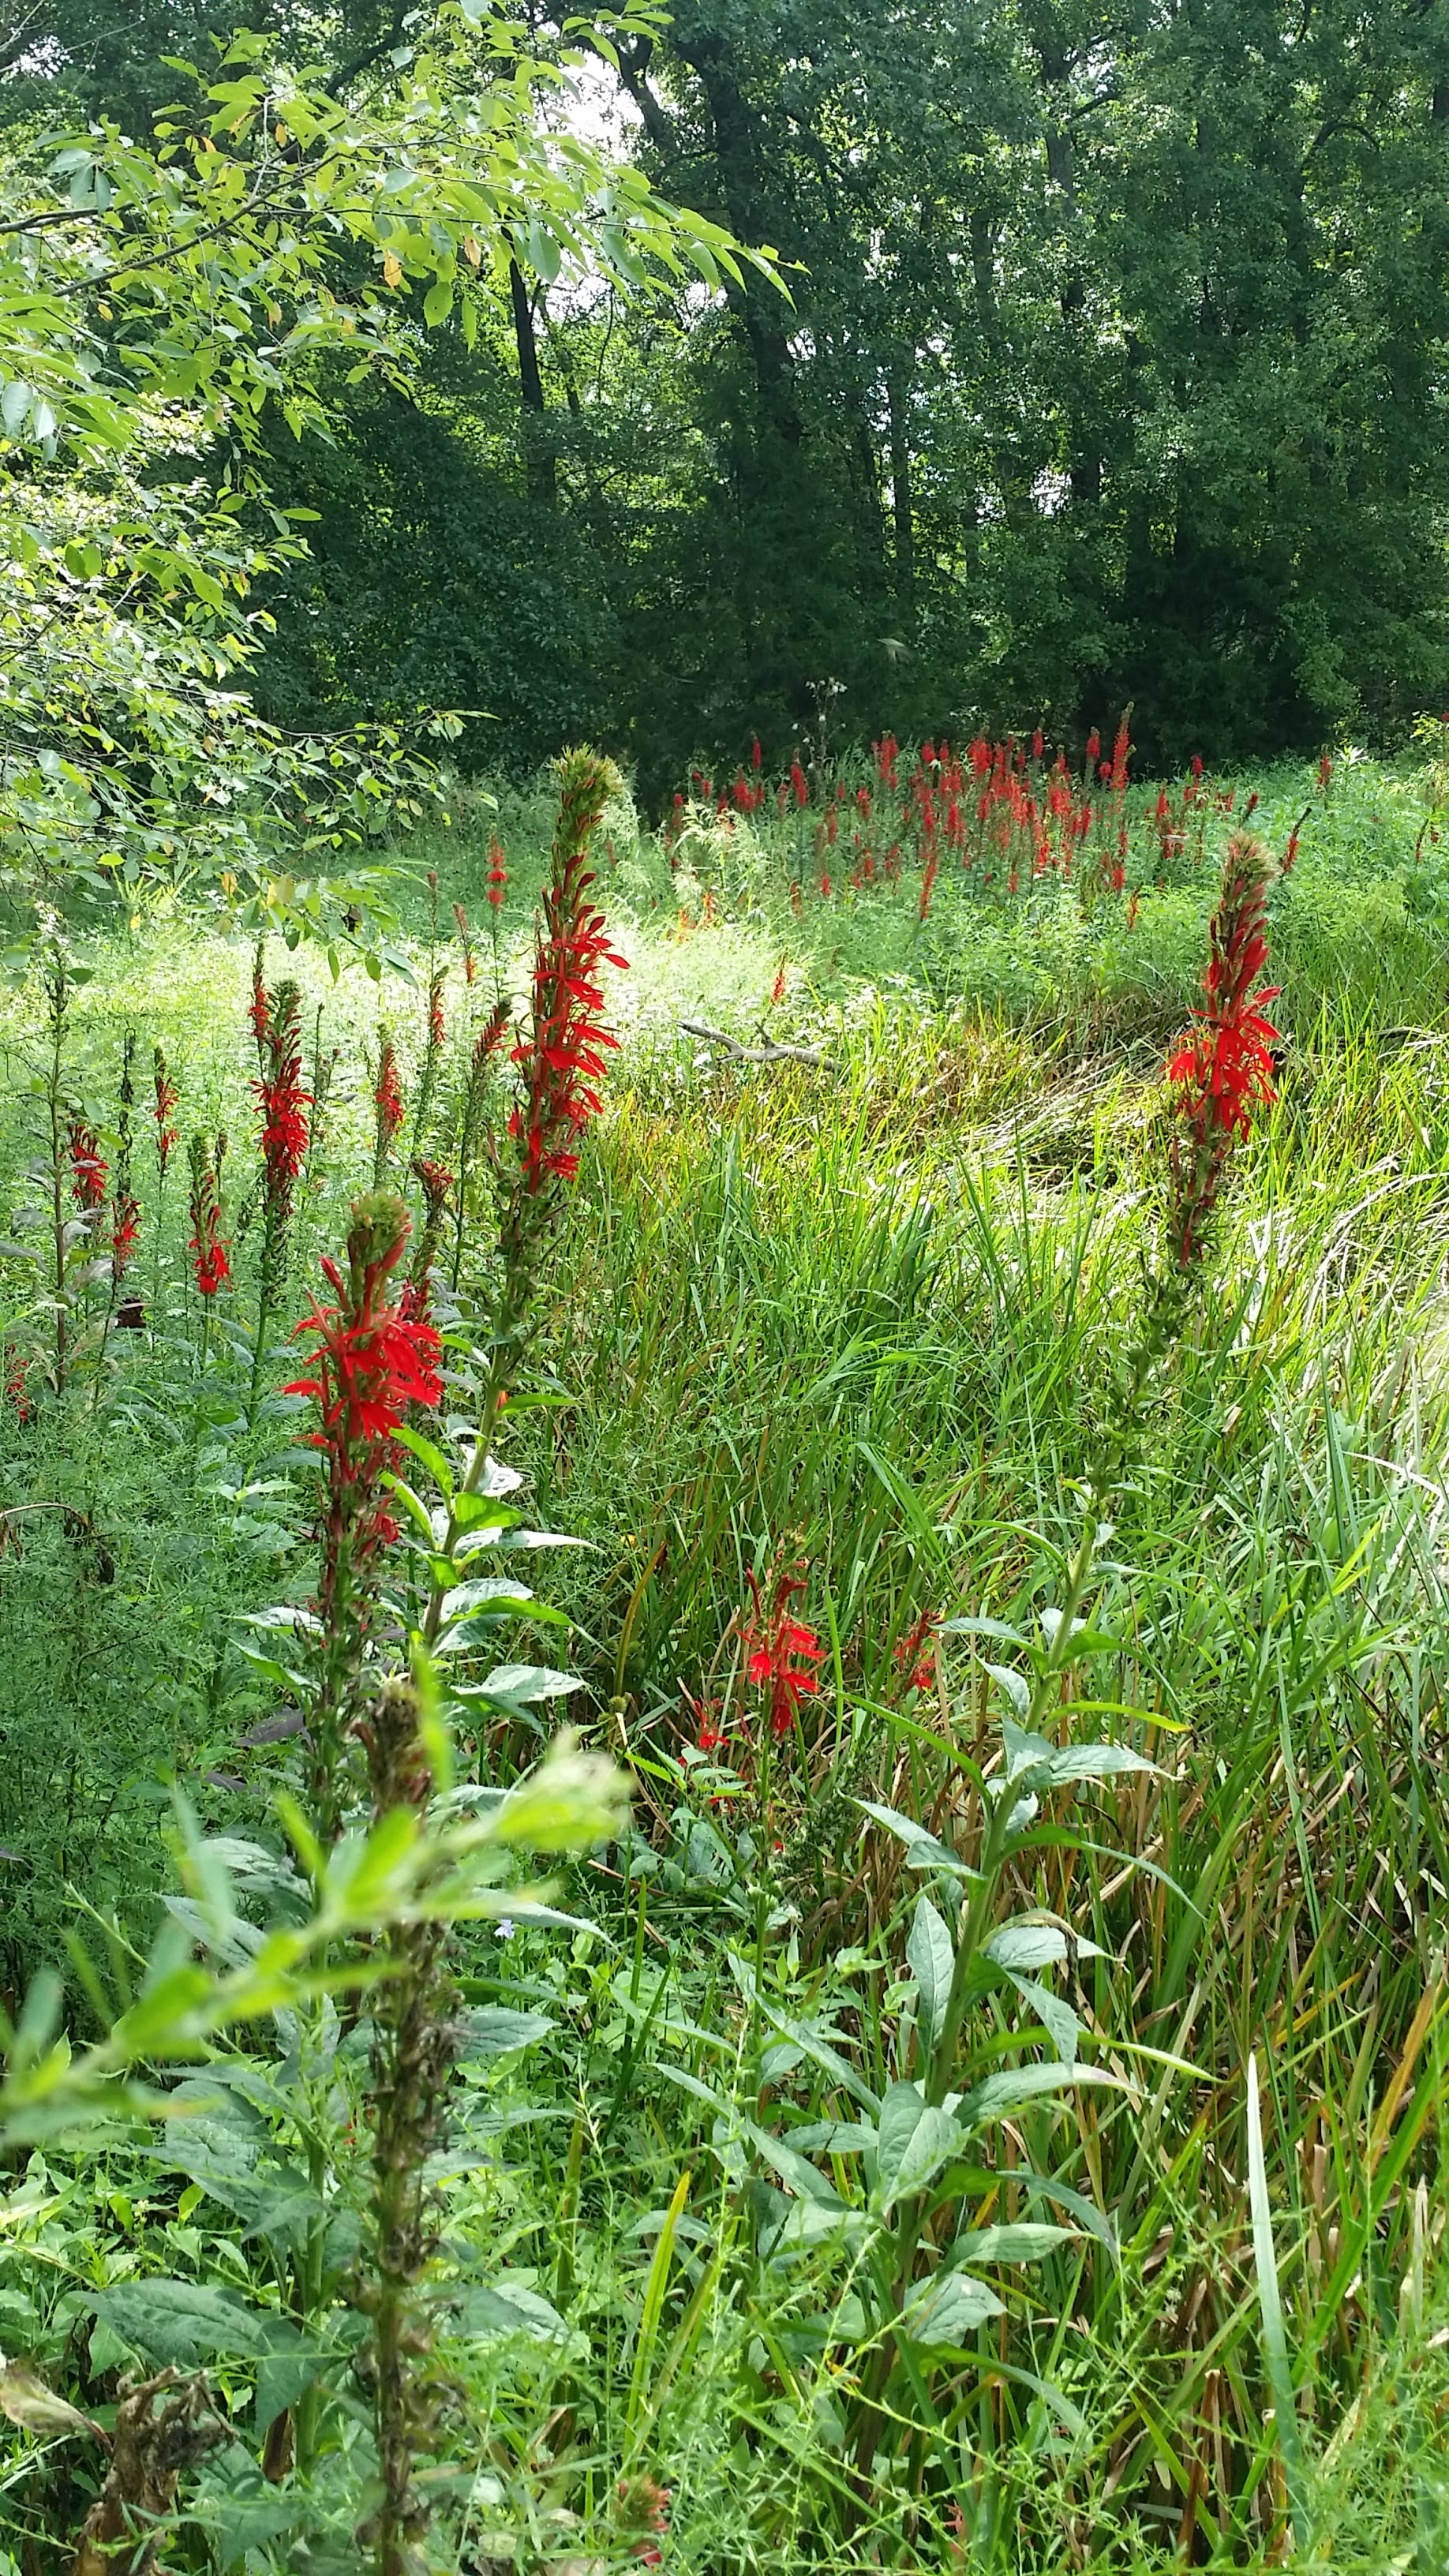 Cardinal flowers near the pond